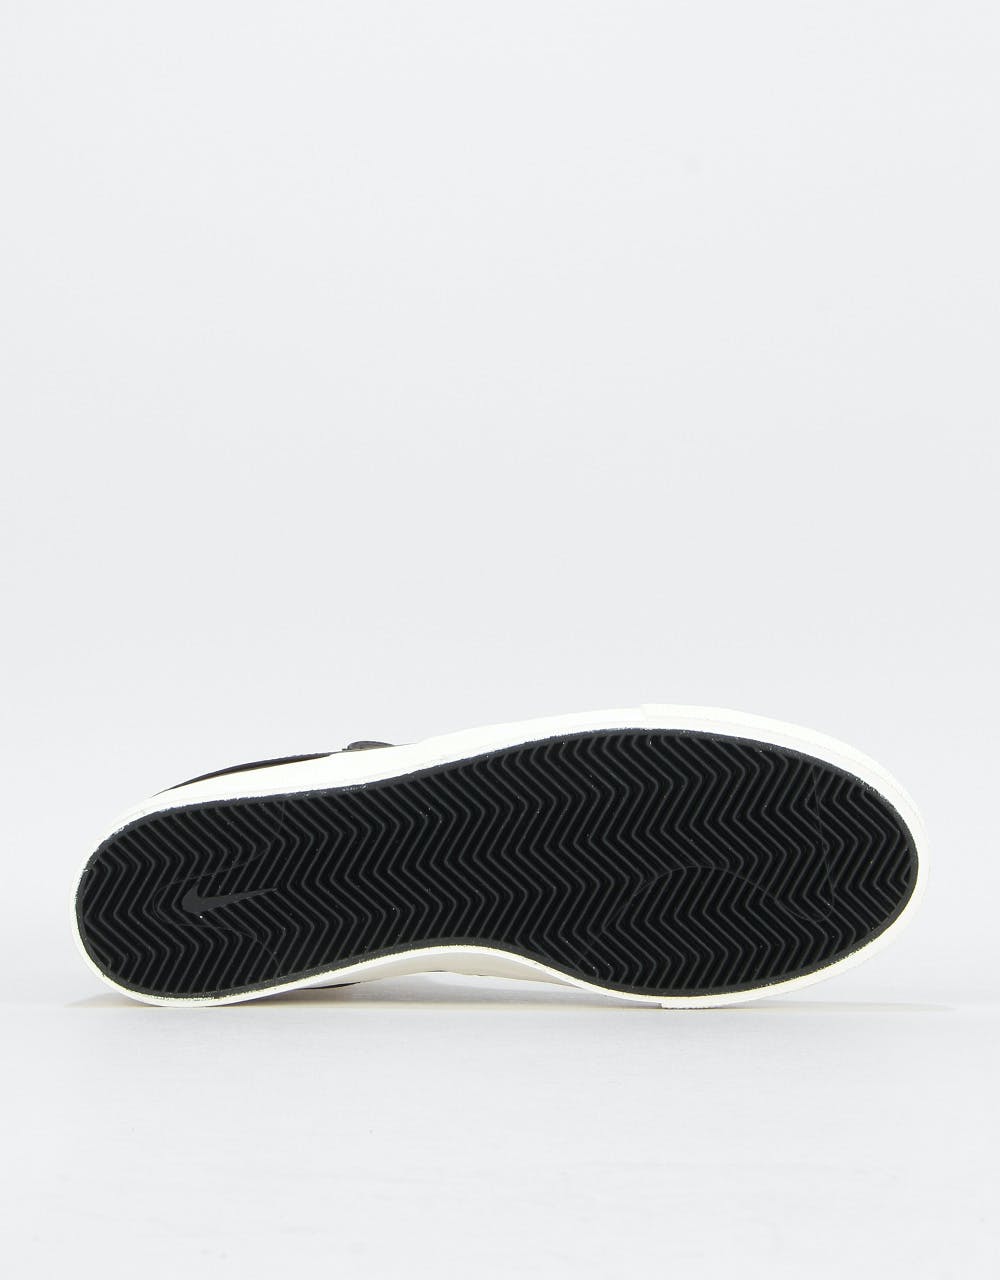 Nike SB Zoom Stefan Janoski Slip Mid RM Skate Shoes - Black/Pale Ivory